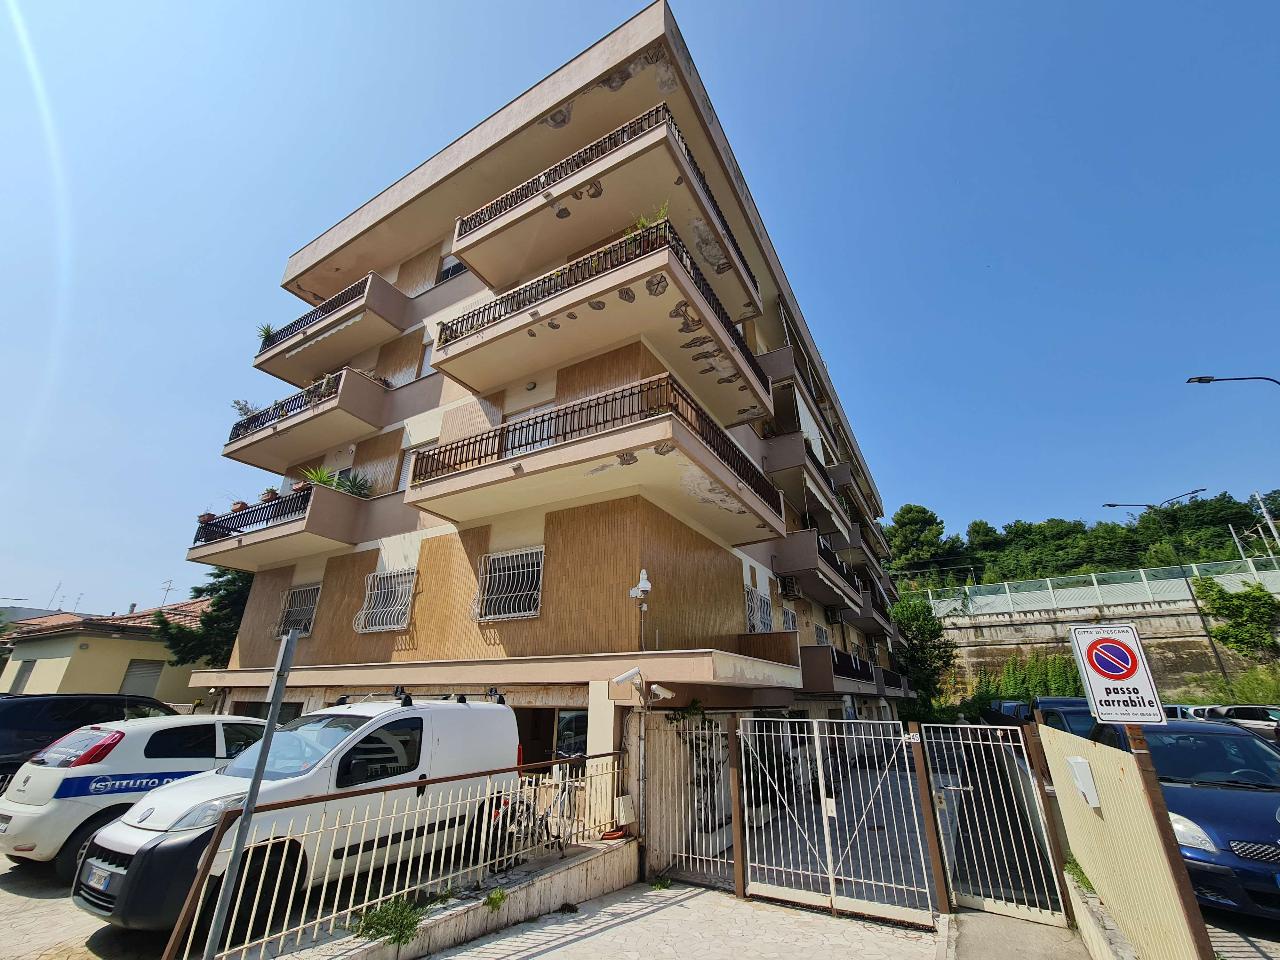 Immobile residenziale in vendita a Pescara